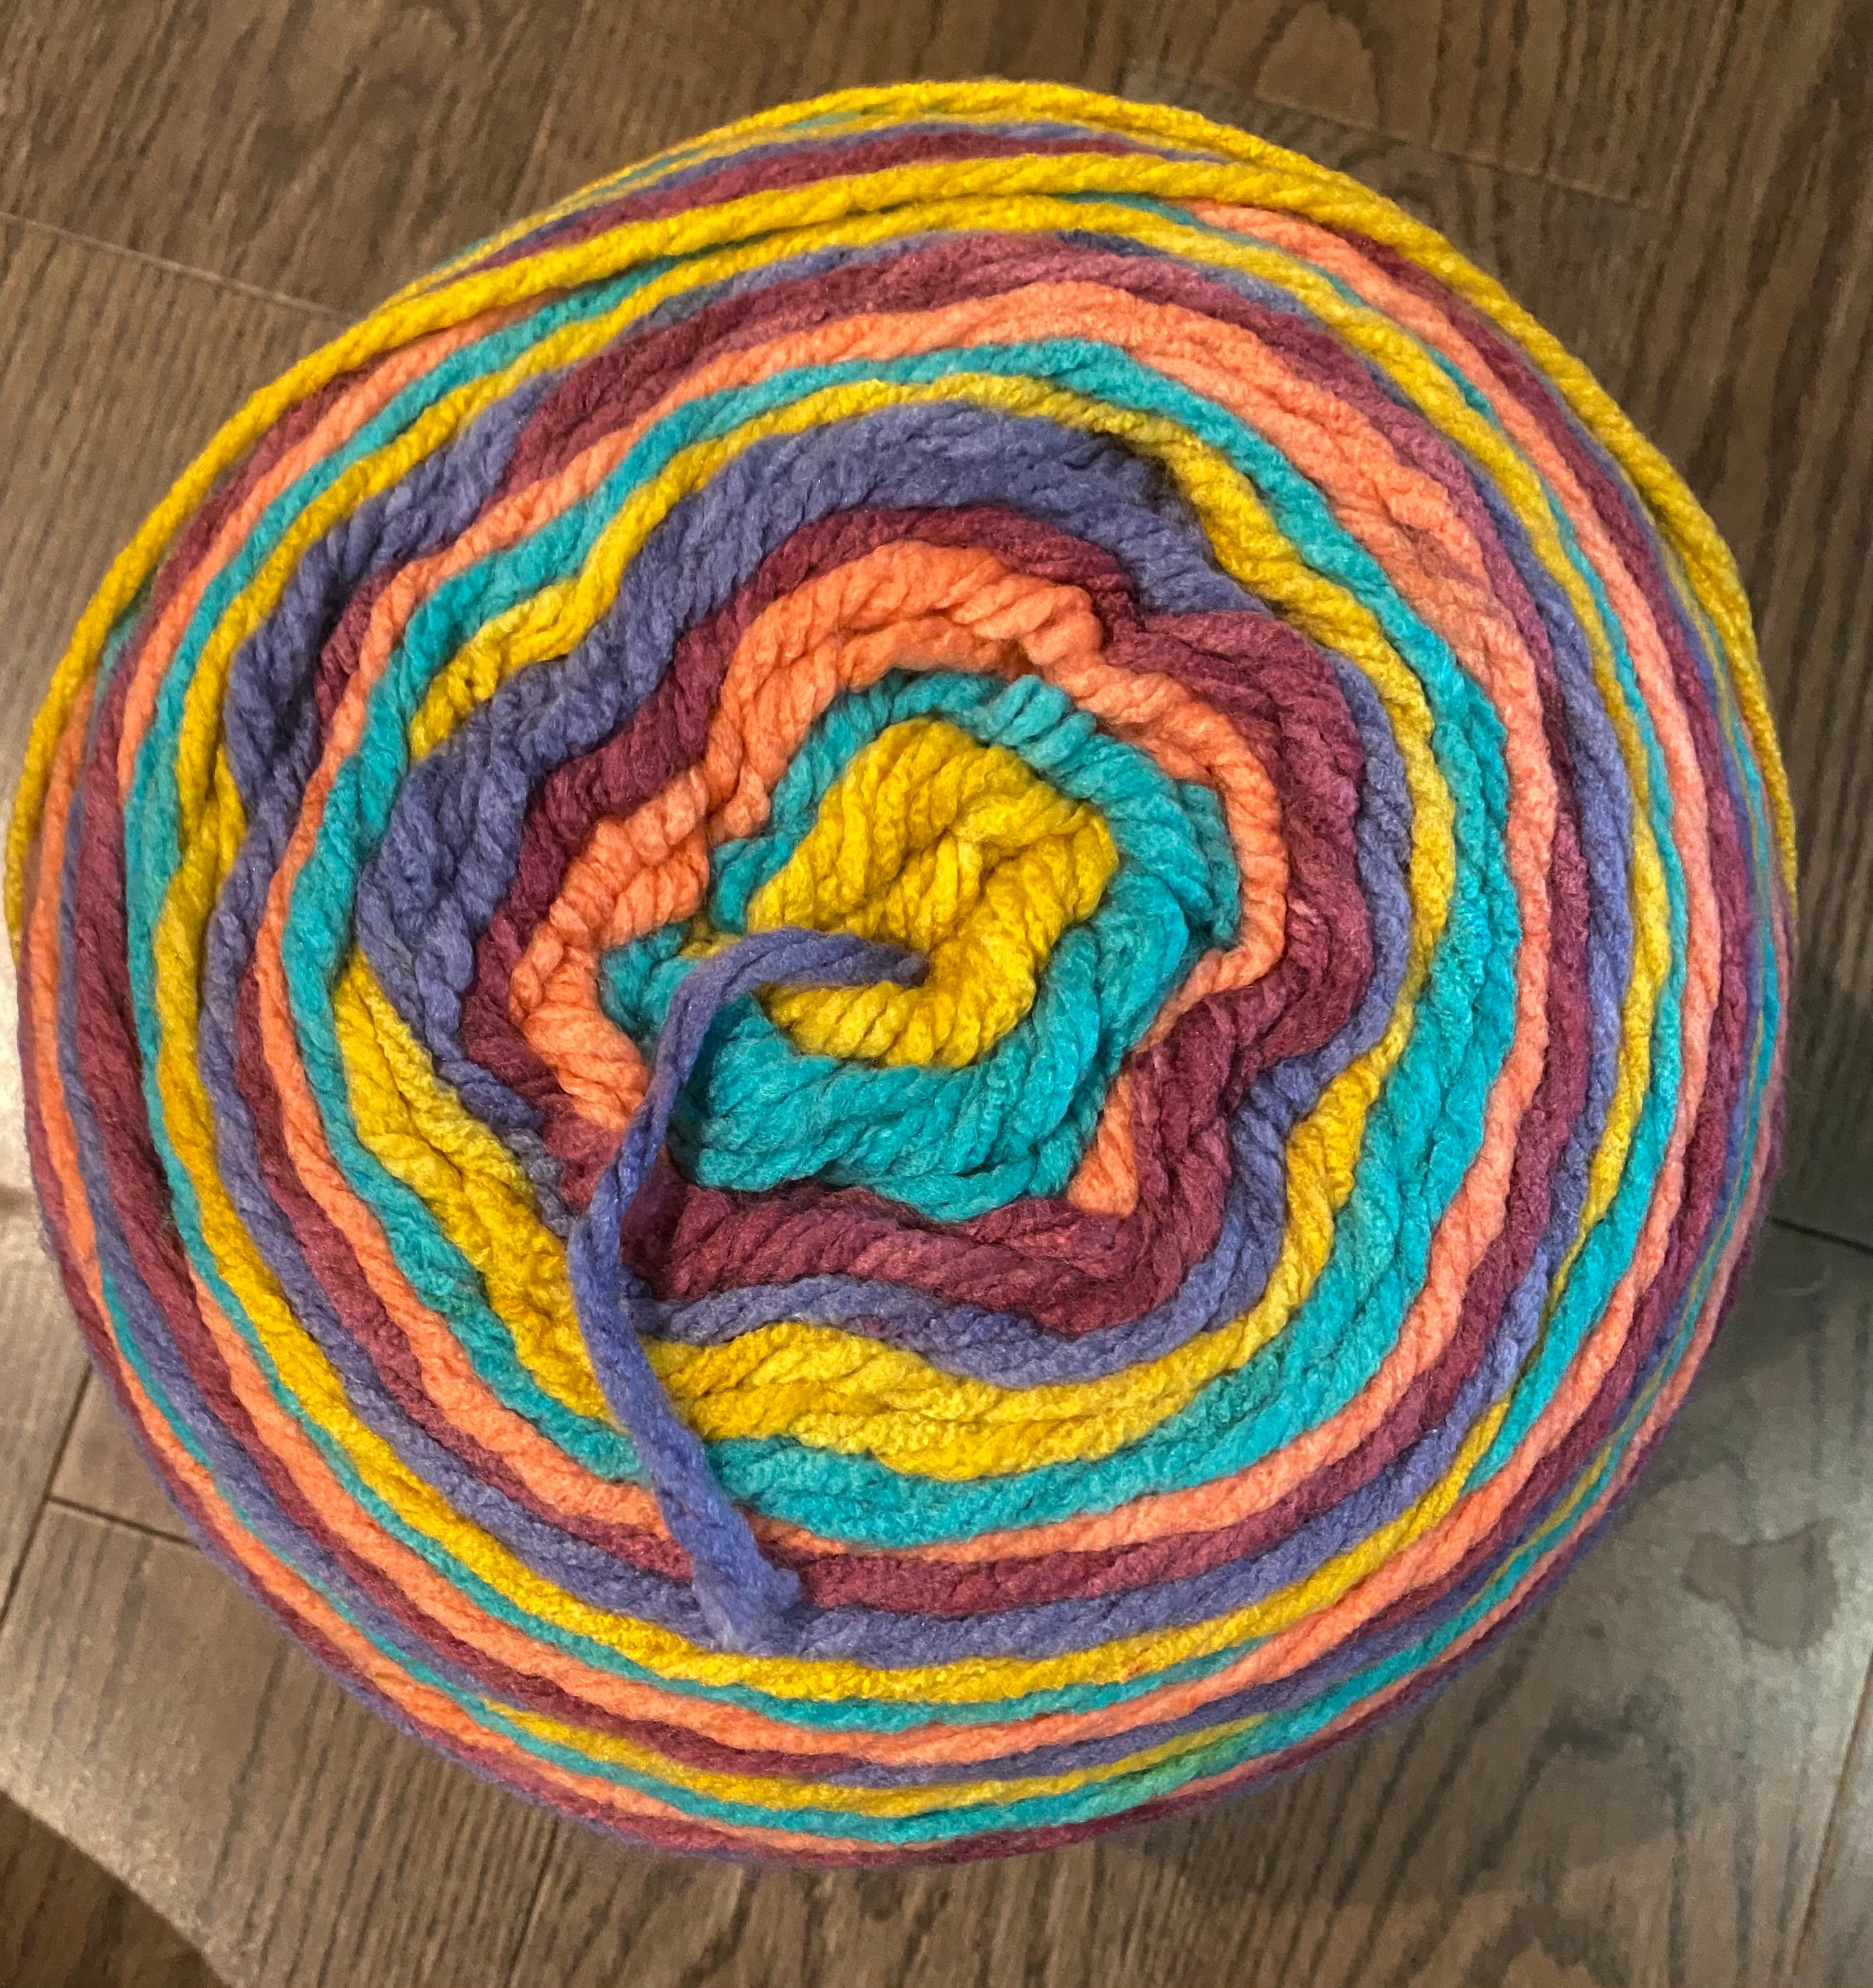 Bulky Yarn, CHOCOLATE FOUNTAIN Caron Anniversary Cake, 2lbs of Yarn for  Crochet, Knitting Yarn, Blanket, Shawl, Throw, Craft Supply 